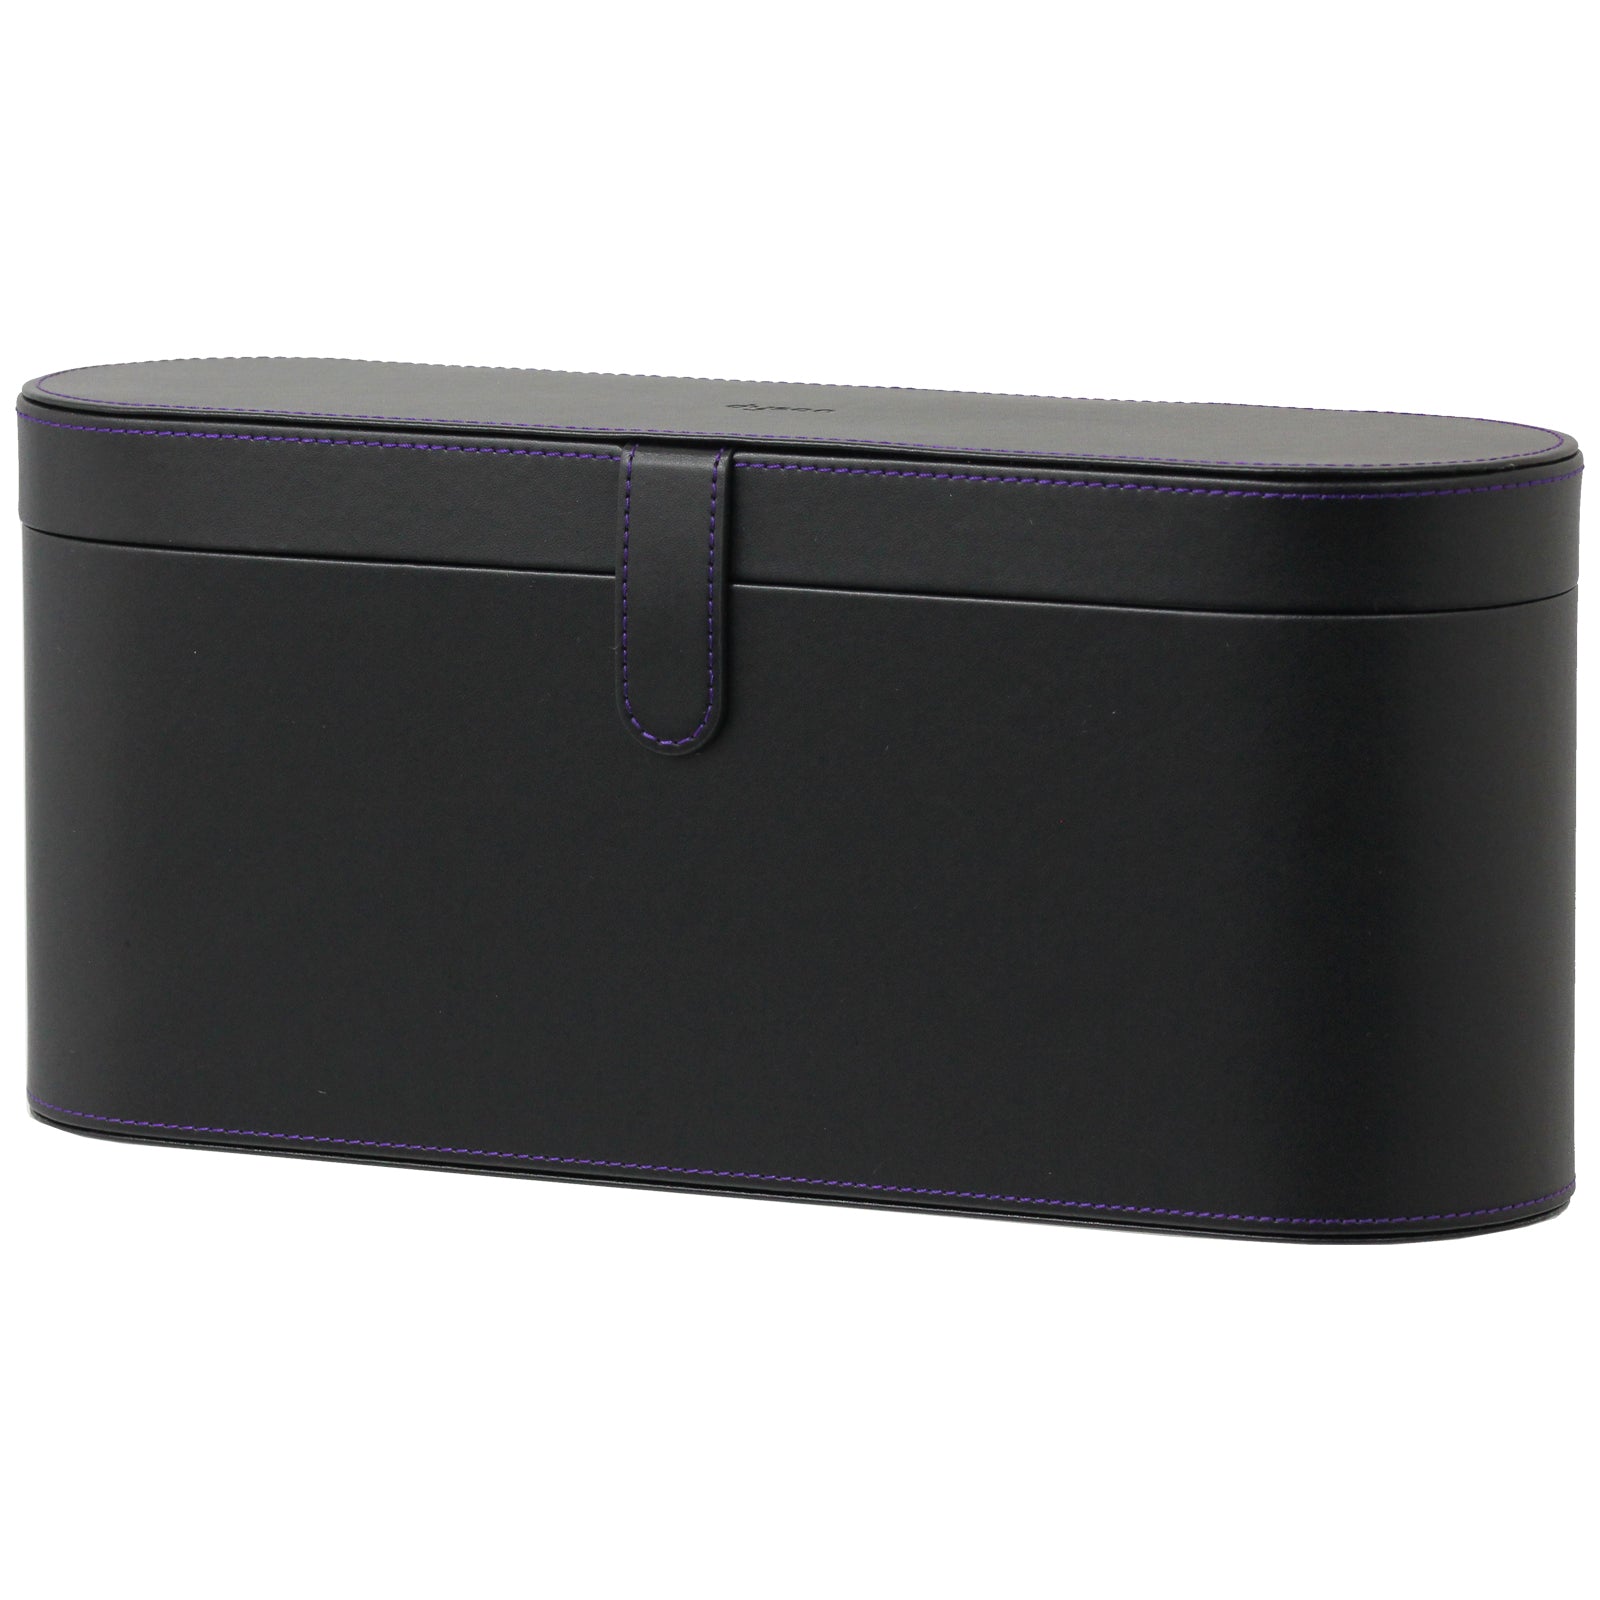 DYSON Supersonic™ Hair Dryer Box Travel Storage Presentation Case (Black)